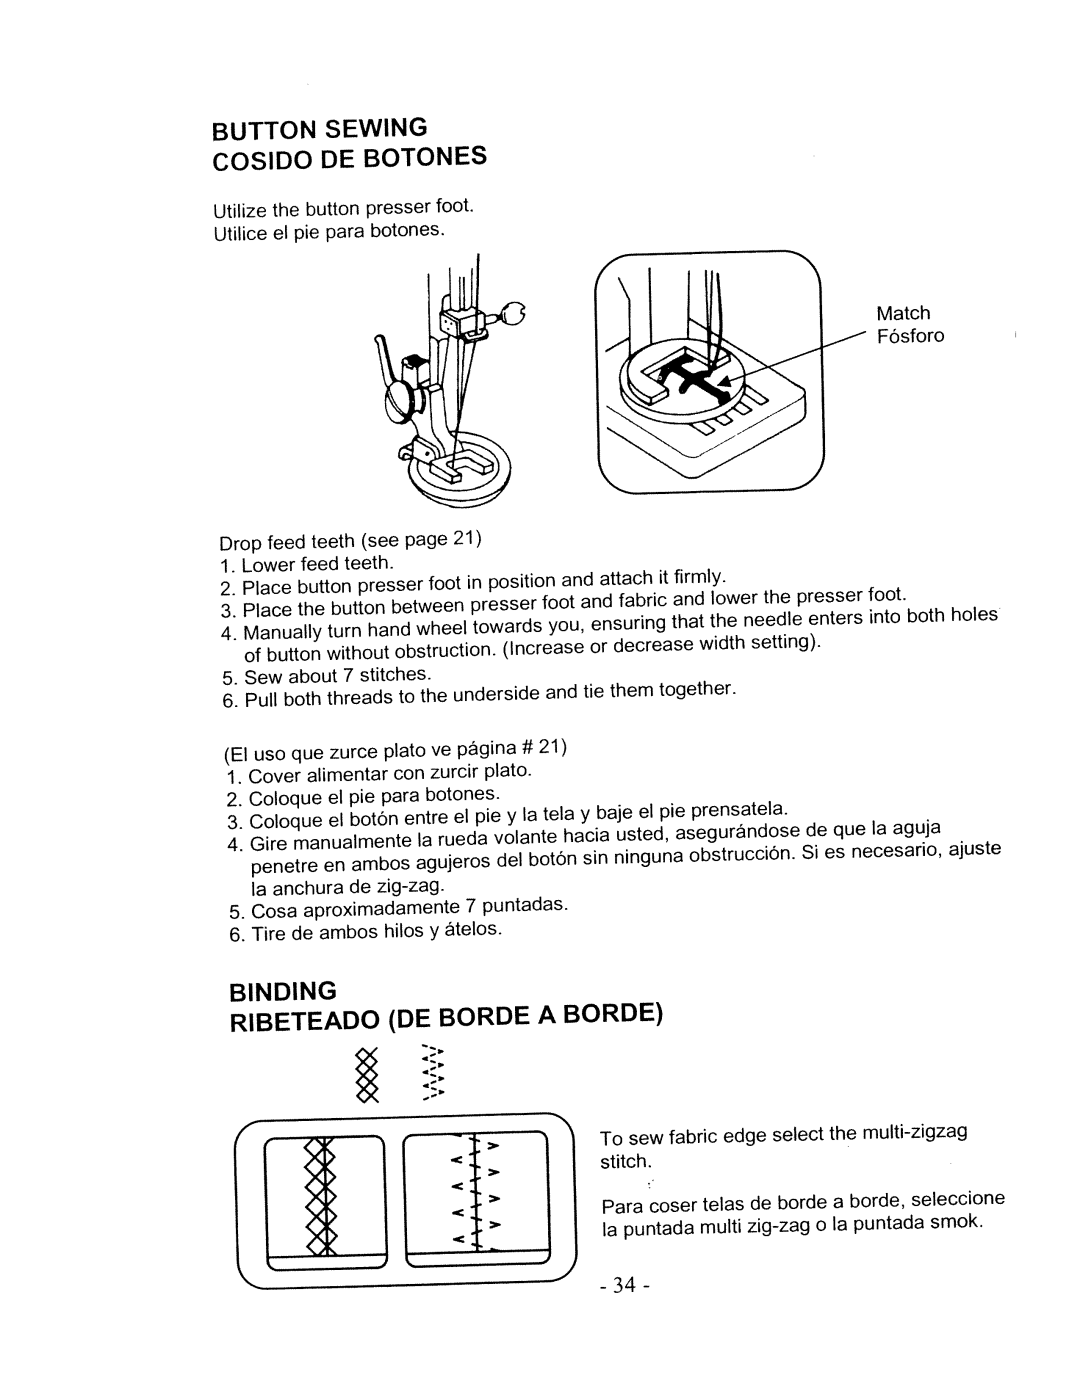 White W480 manual Cosido Botones, Button Sewing, Borde, Binding Ribeteado 